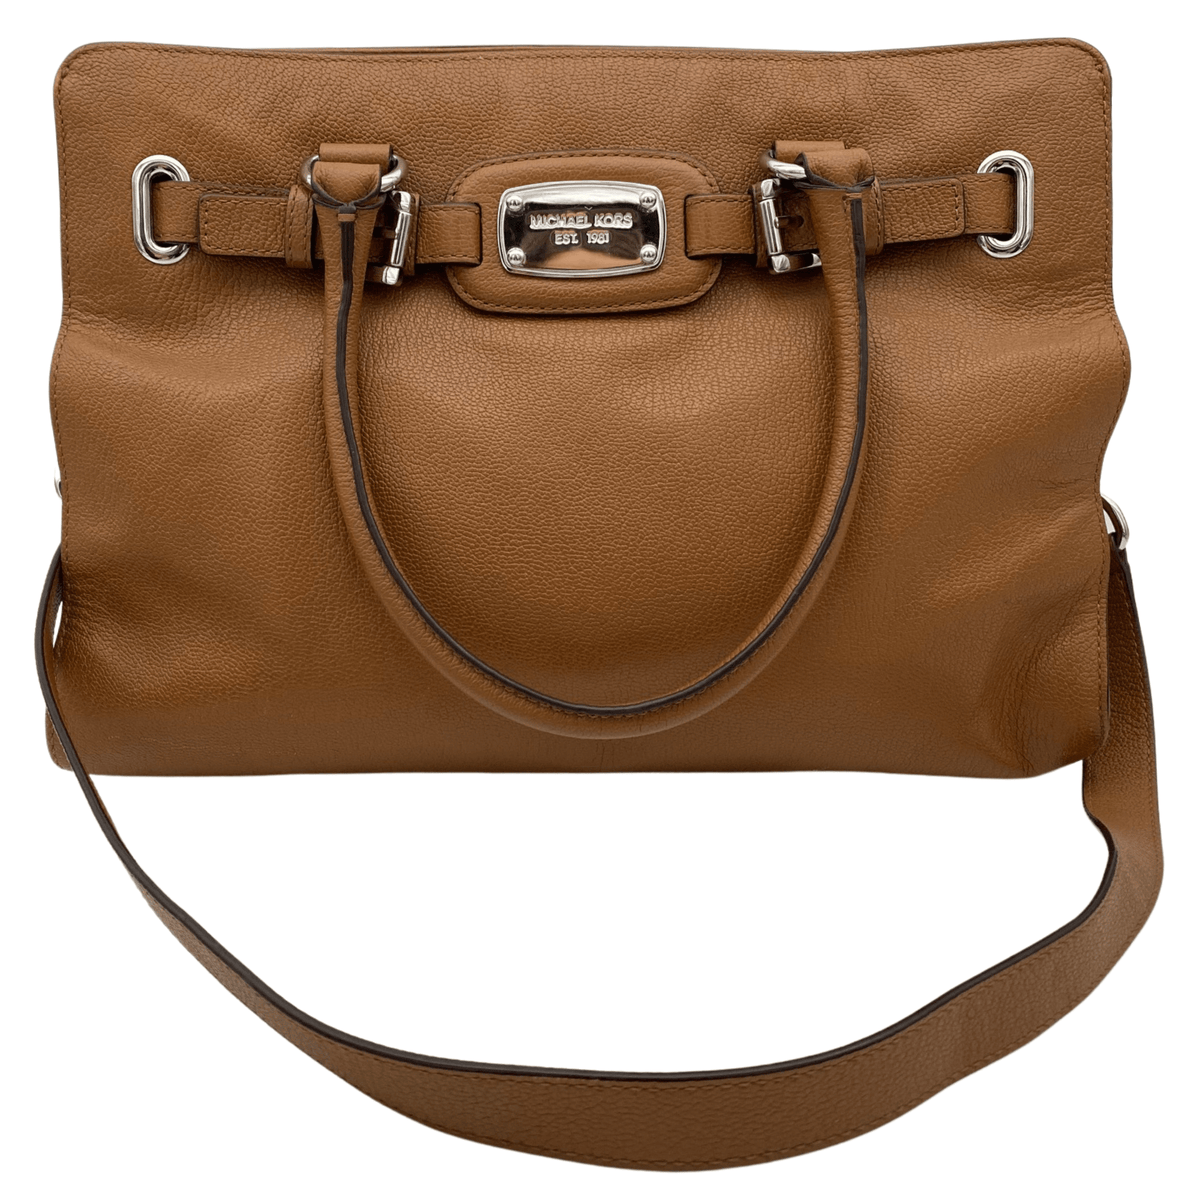 Handbags / Purses from Michael Kors for Women in Brown